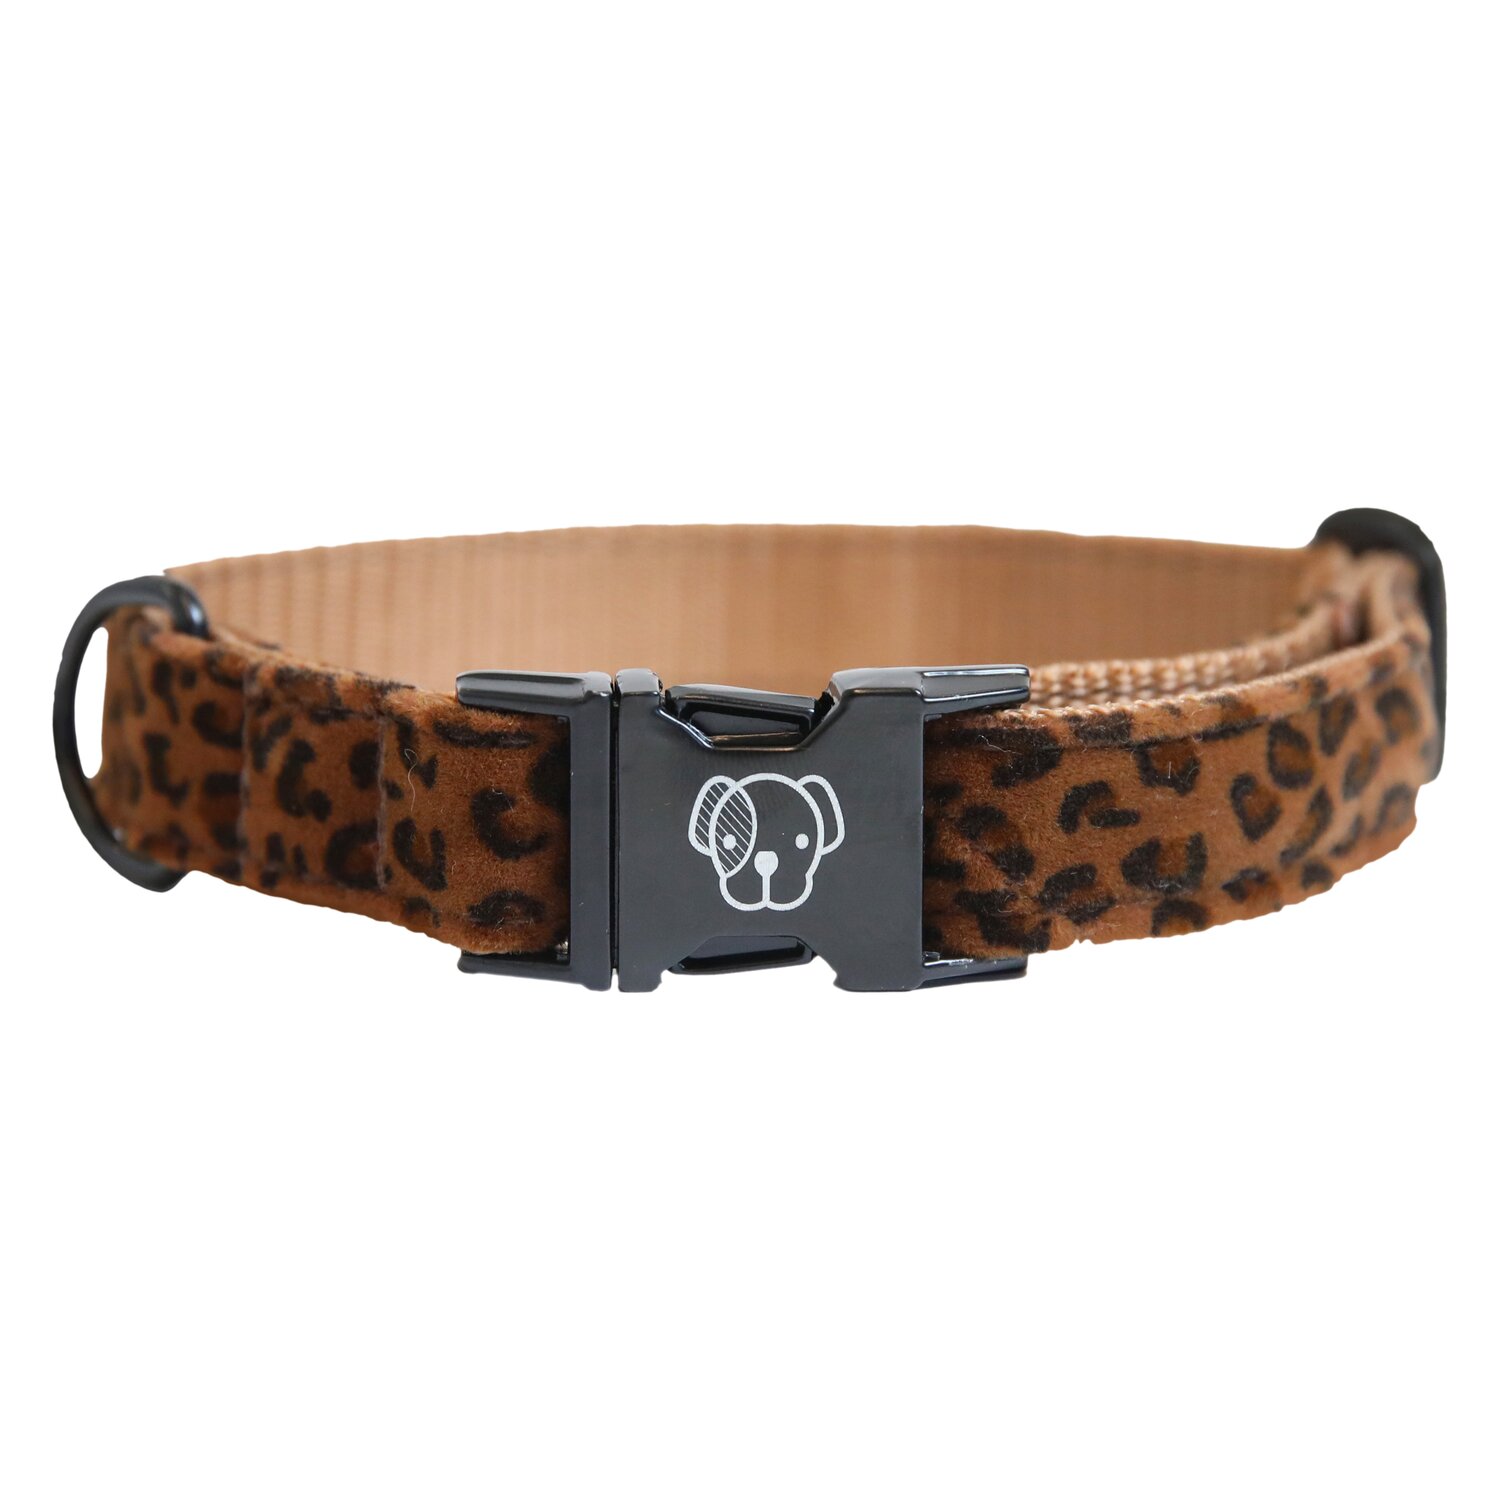 KENTUCKY Dogwear Hundehalsband Leopard 